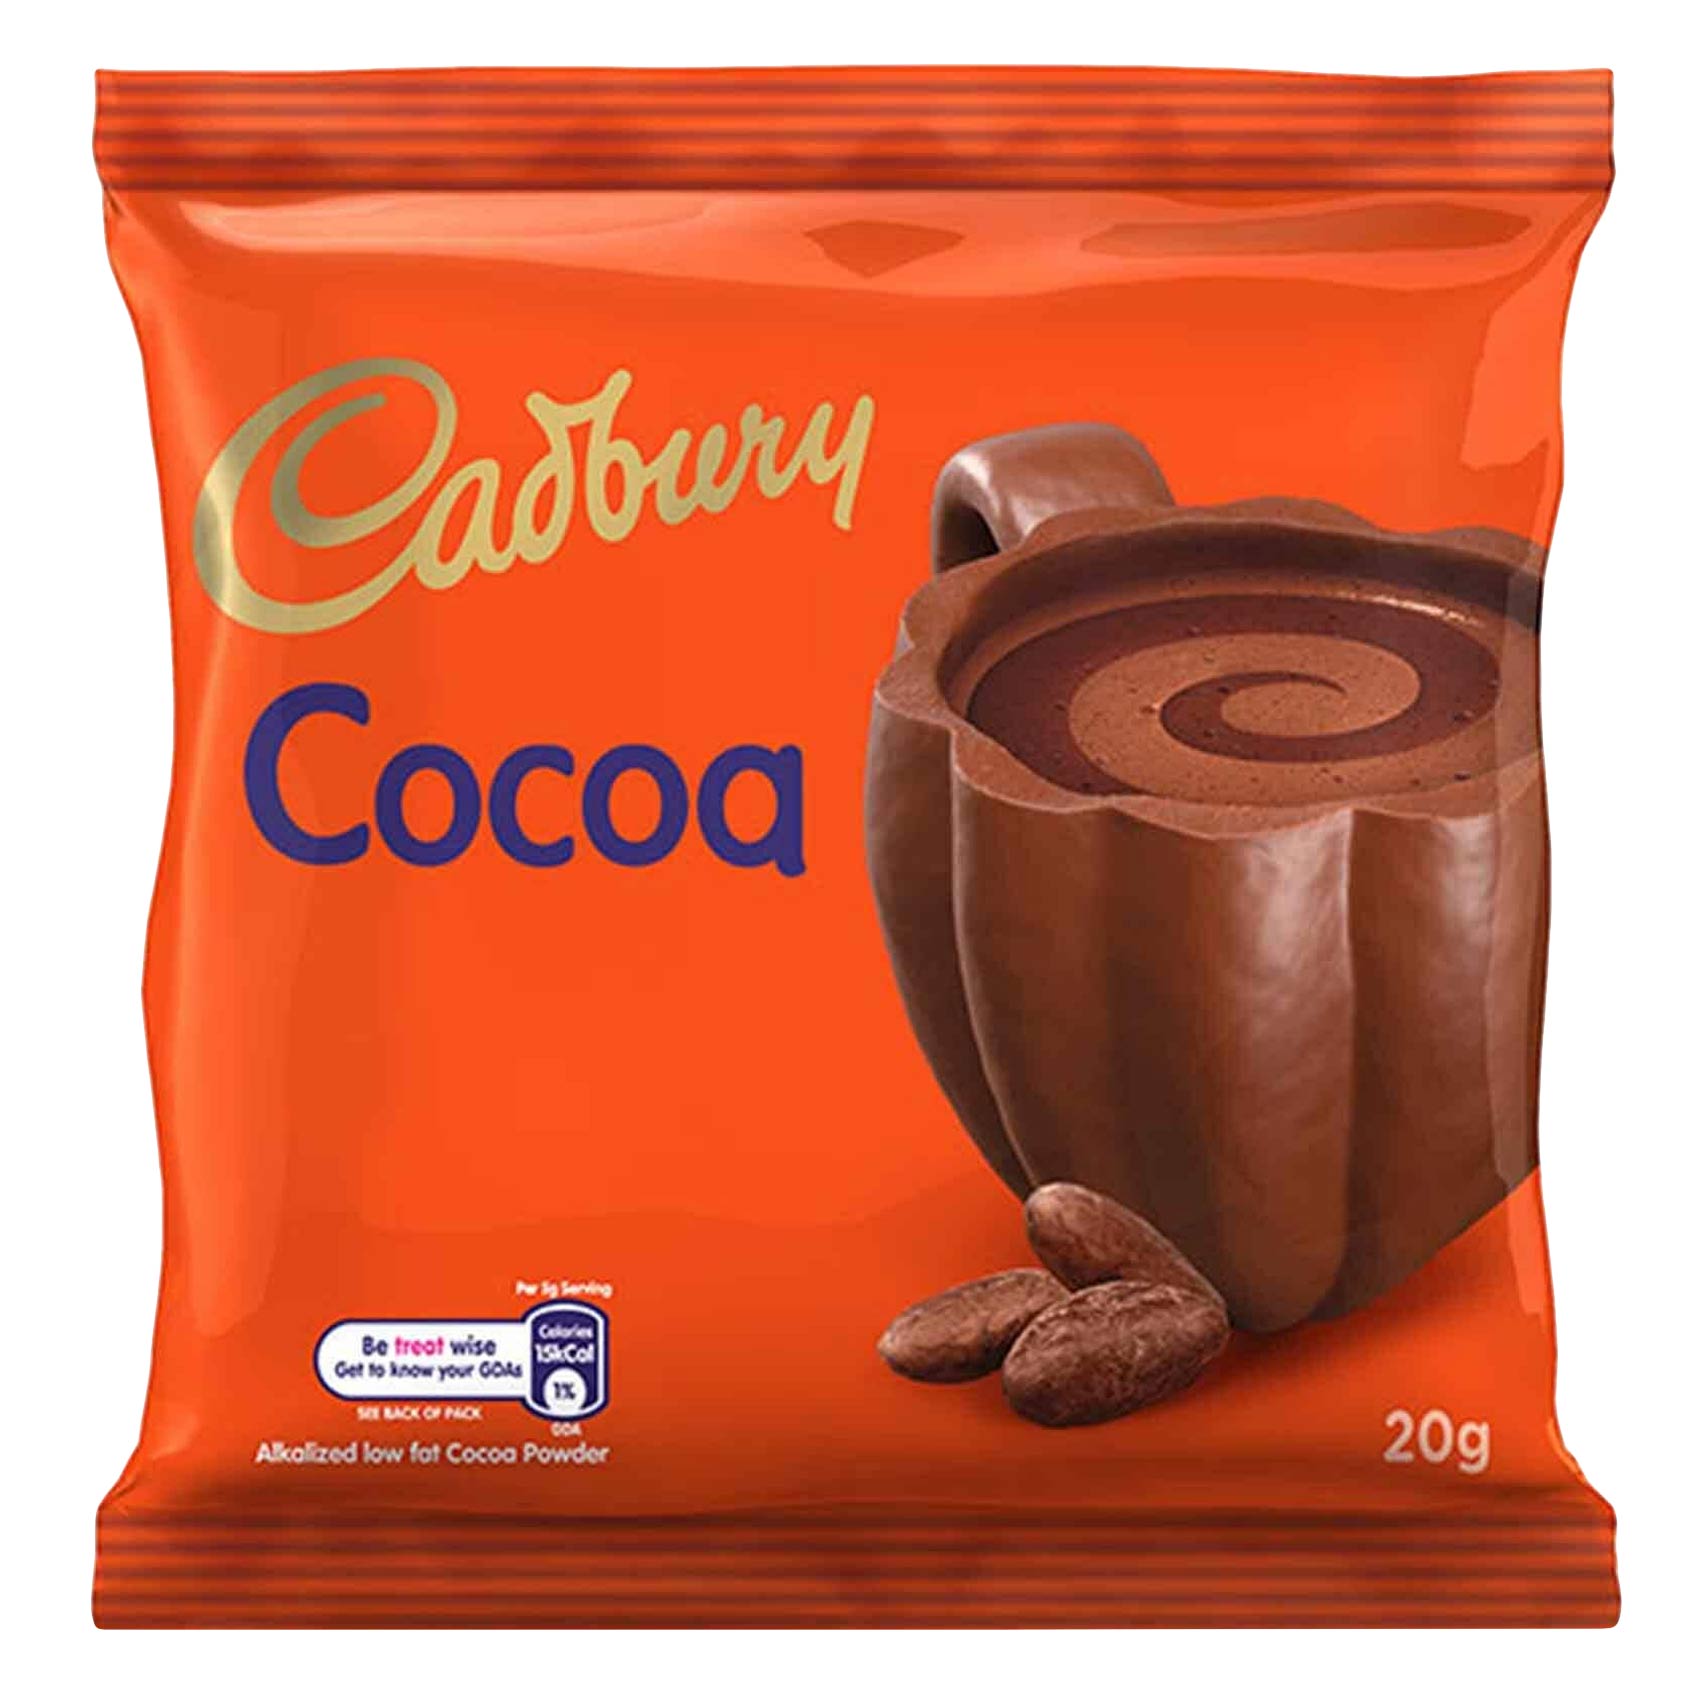 Cadbury Cocoa Powder 20g